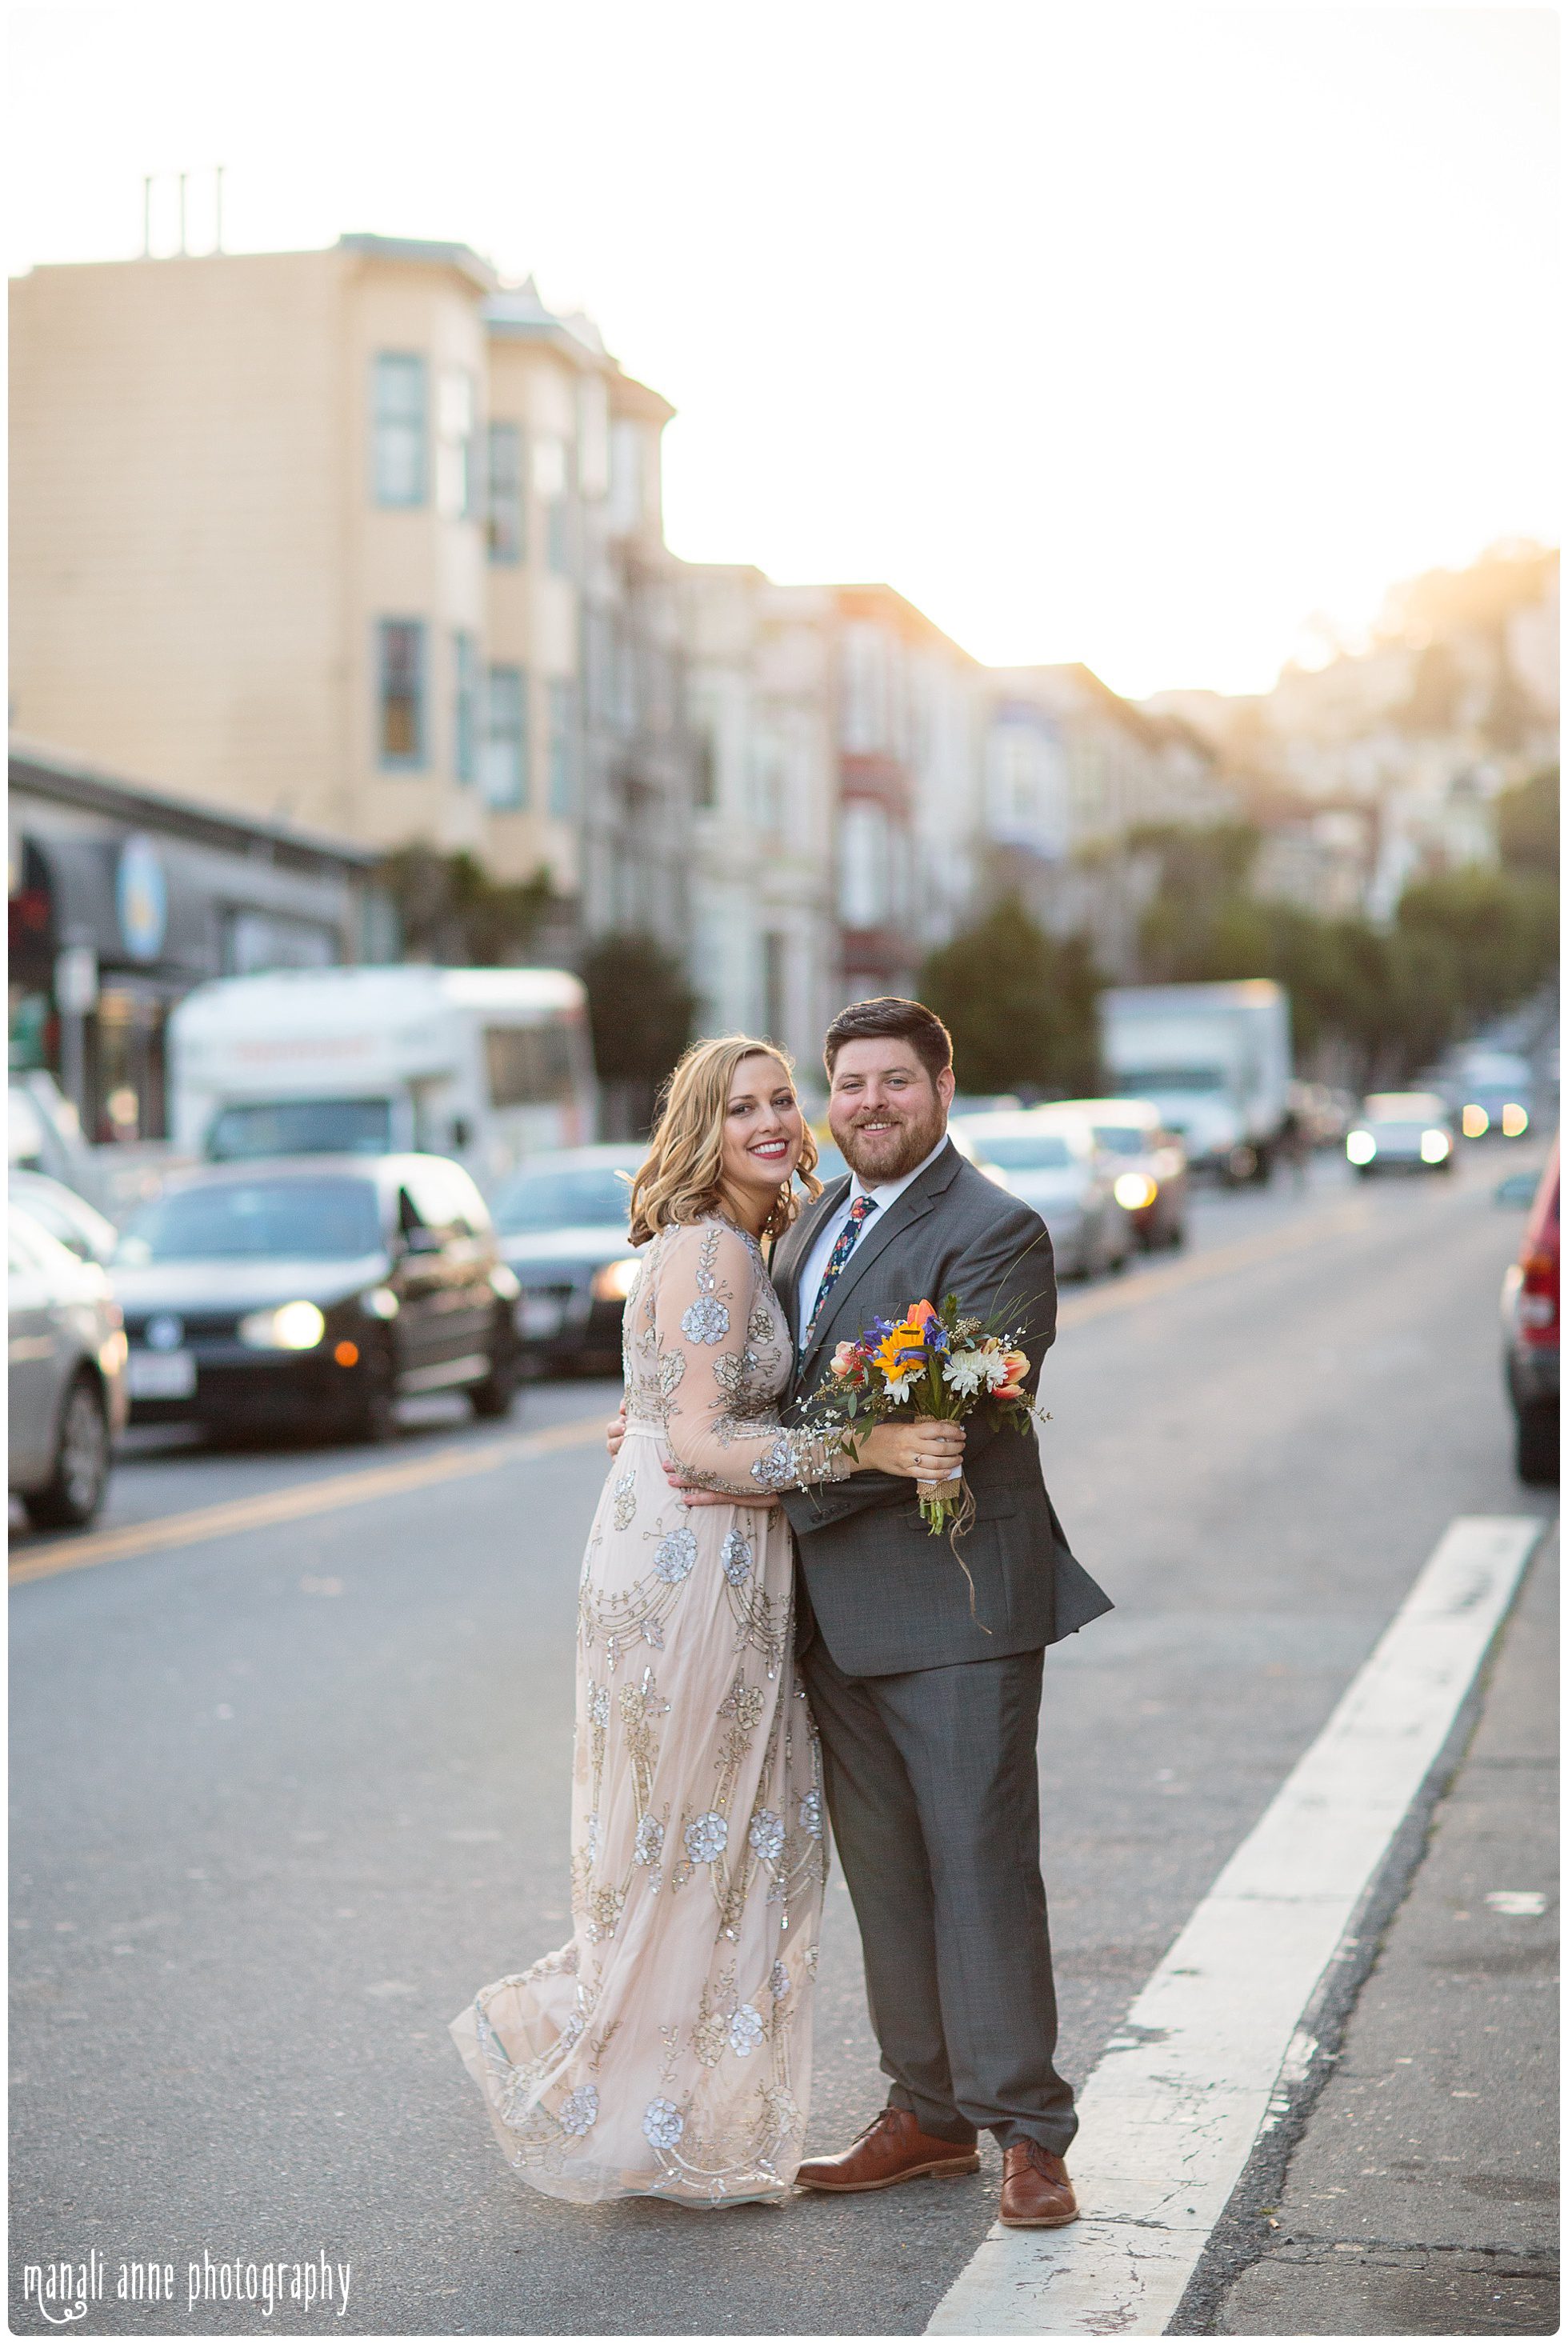 San Francisco Wedding Adventure with Jenna & Mike! » Manali Anne ...